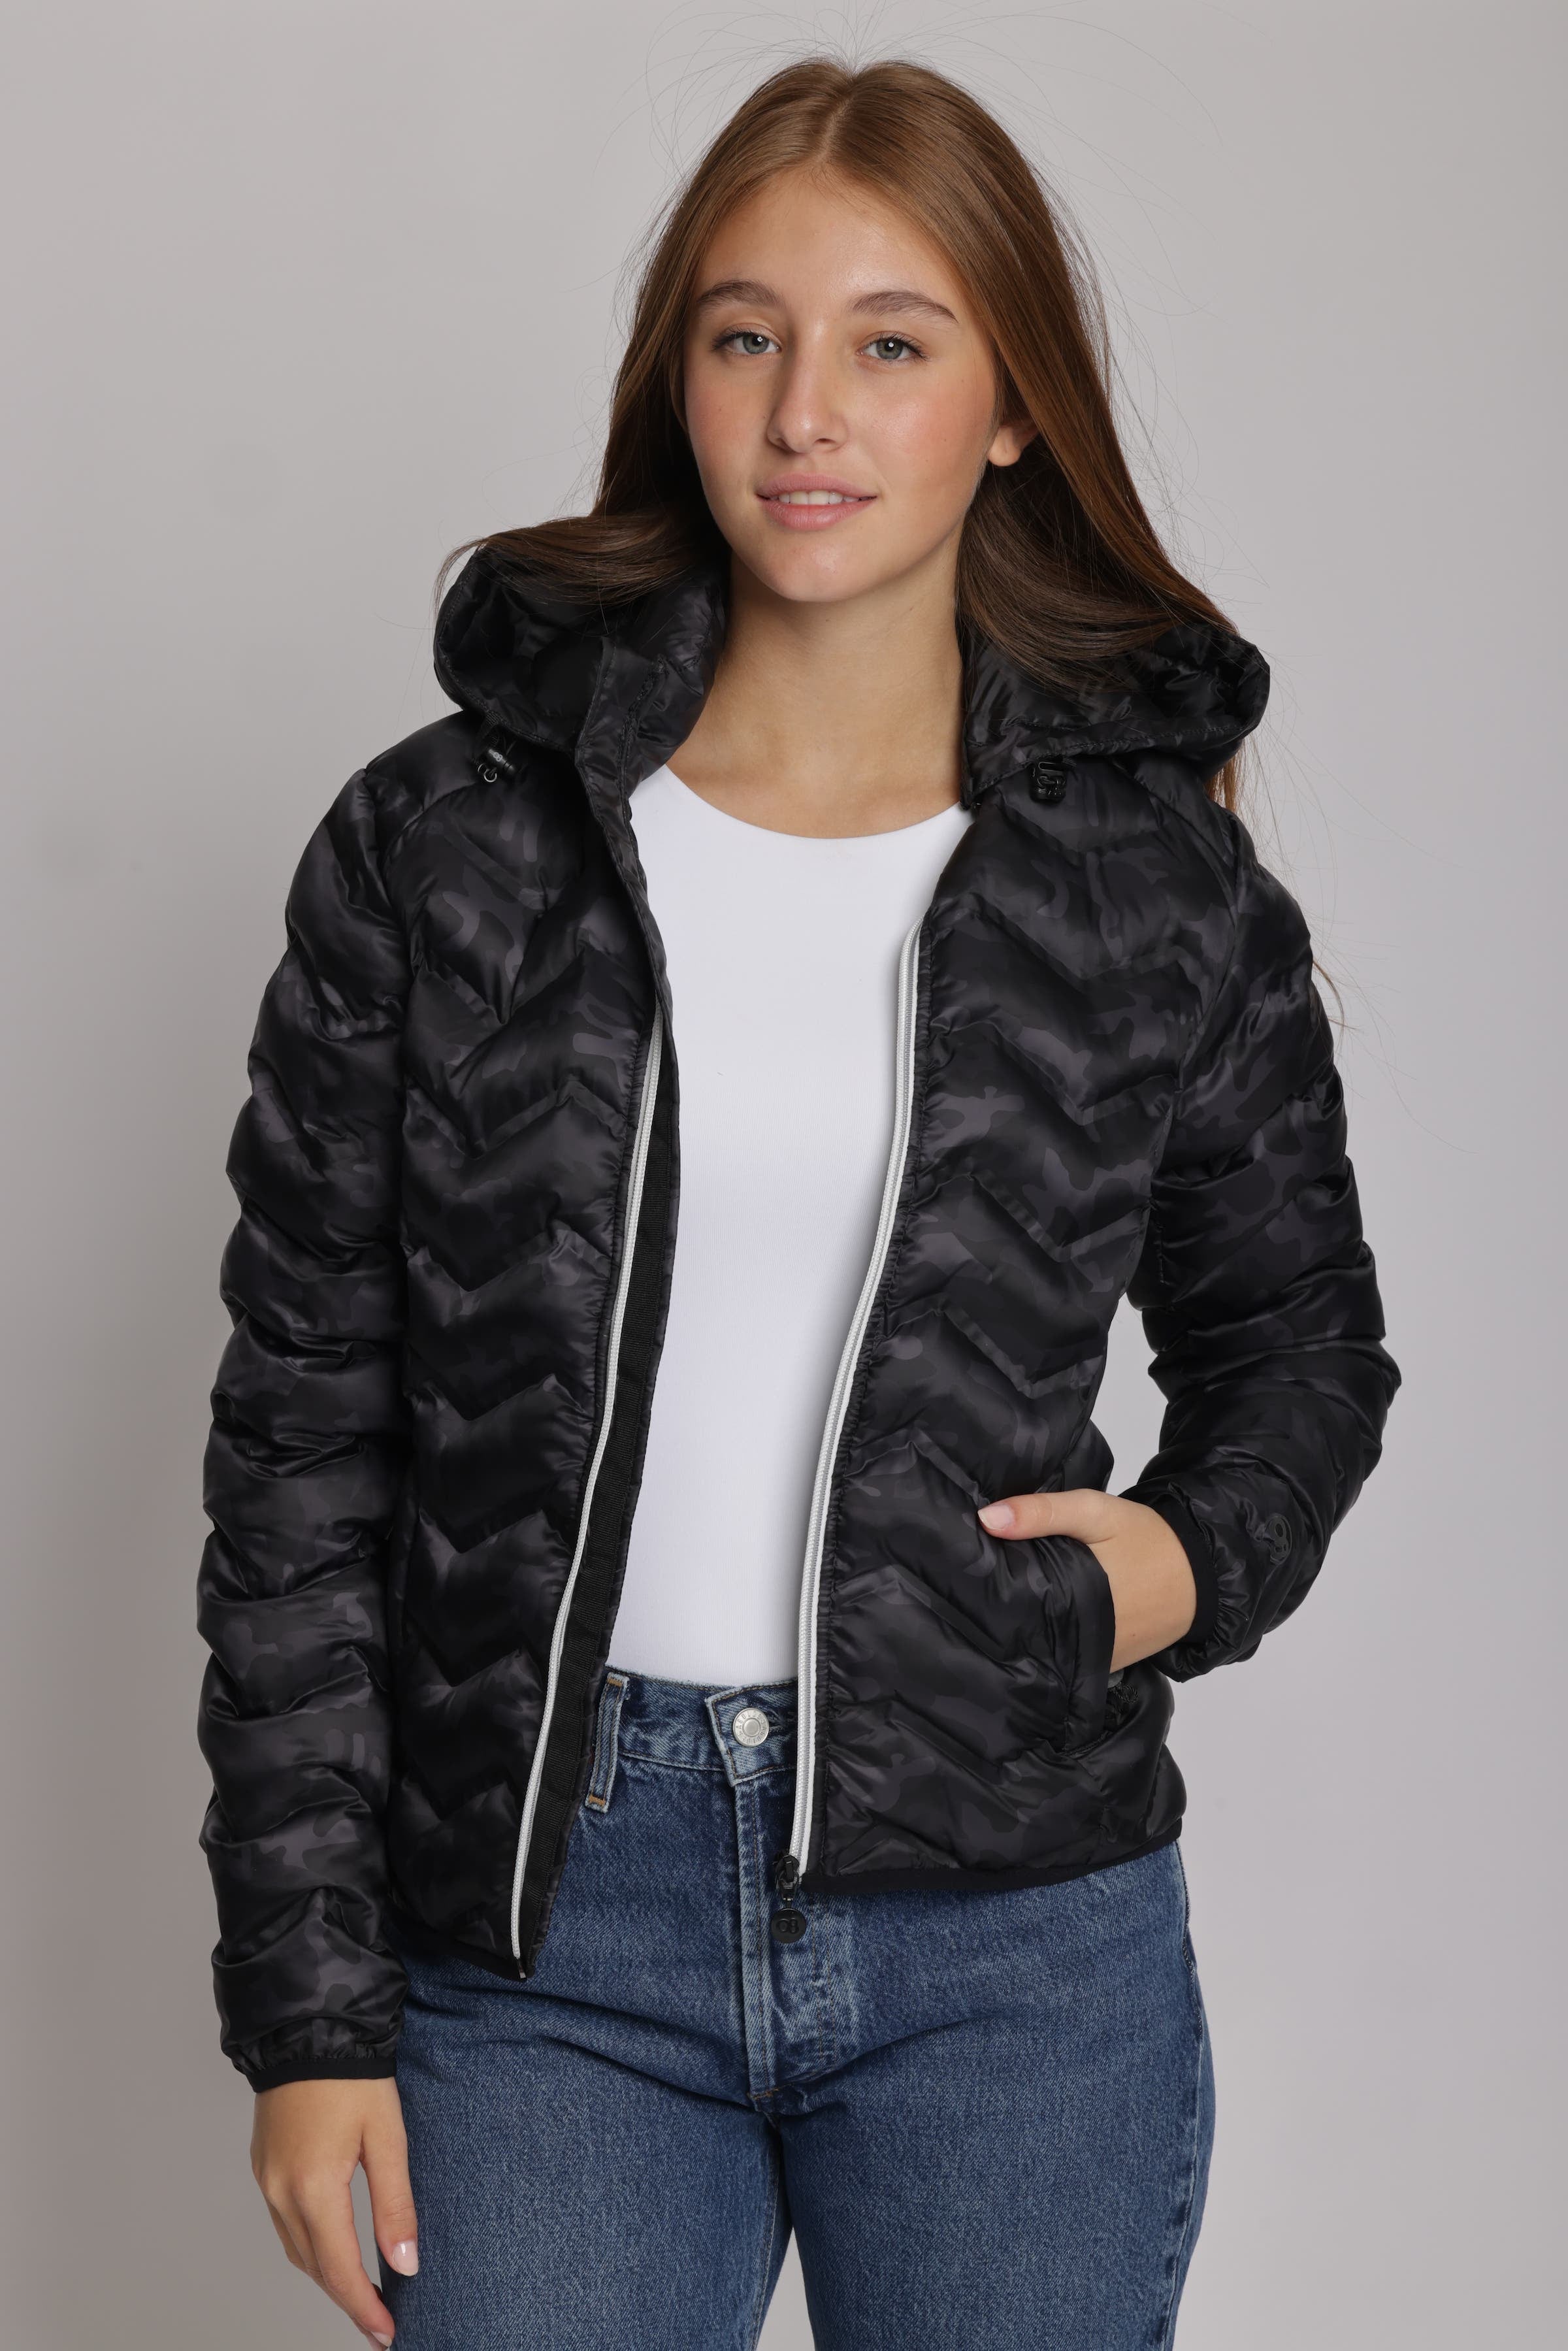 Women's packable puffer jacket in black camo